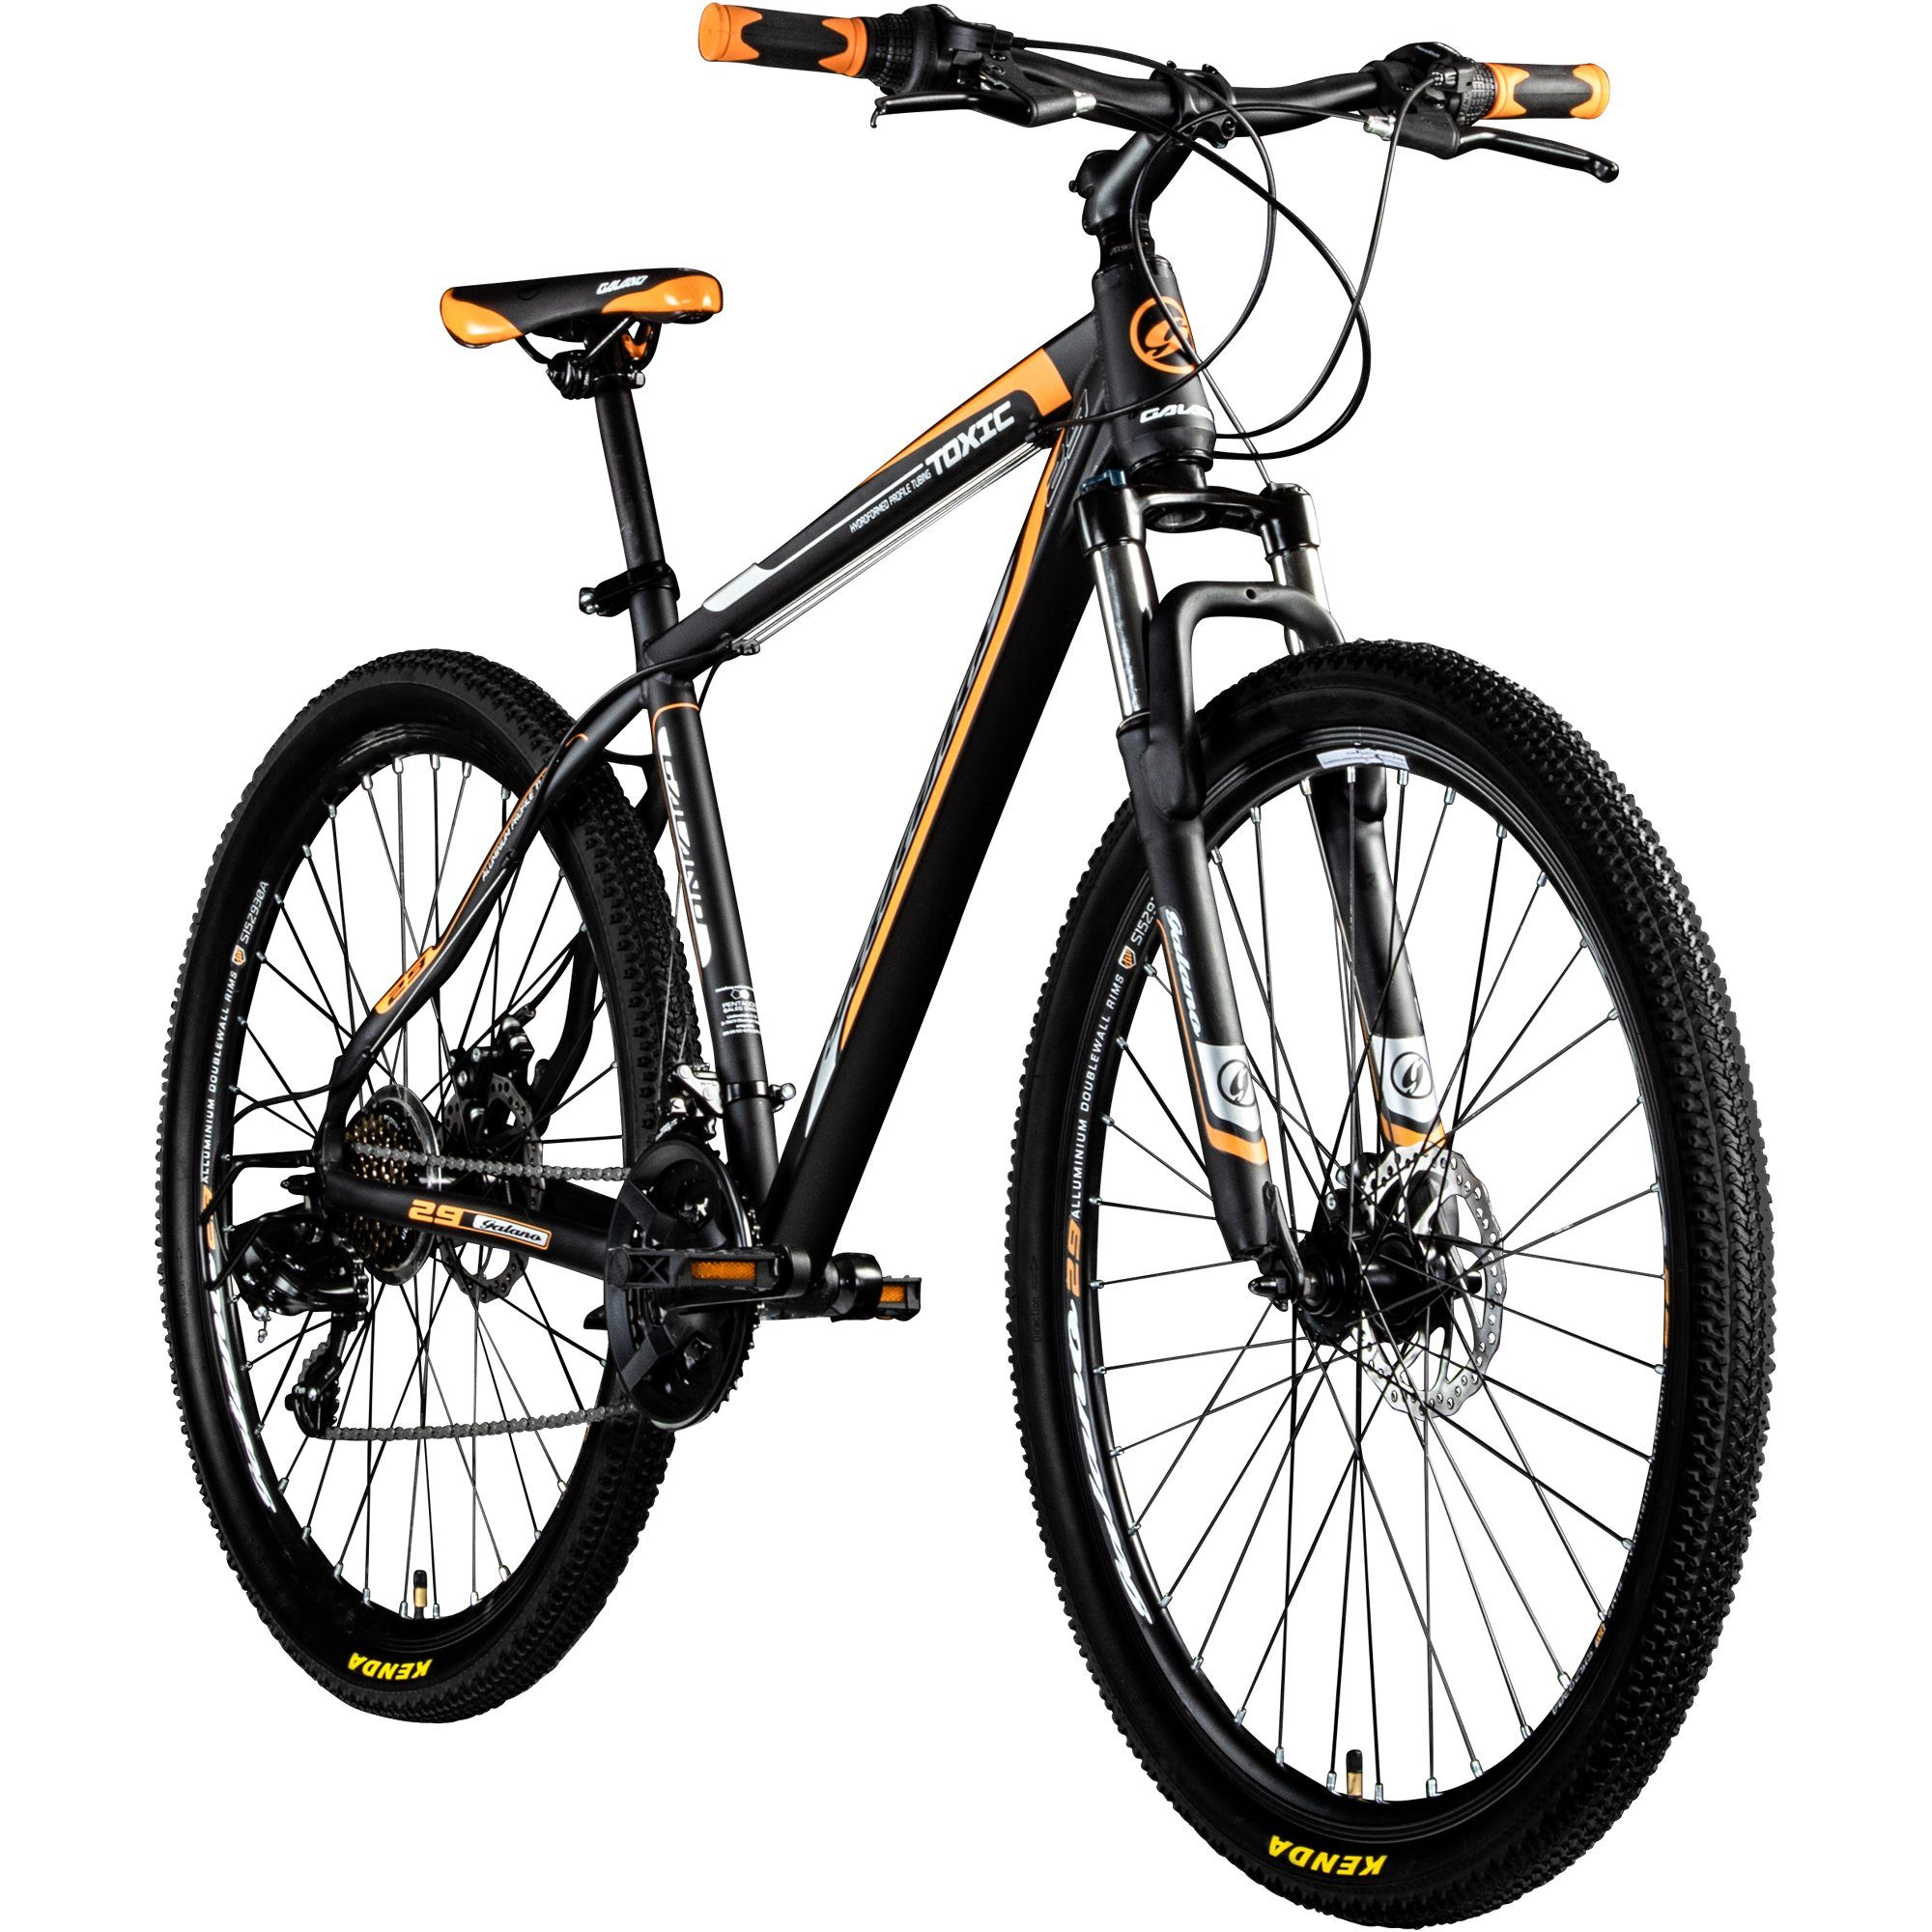 Galano Mountainbike Toxic 29", 21 Gang, Kettenschaltung, Mountainbike Hardtail 29 Zoll für Erwachsene ab 175 cm MTB Fahrrad